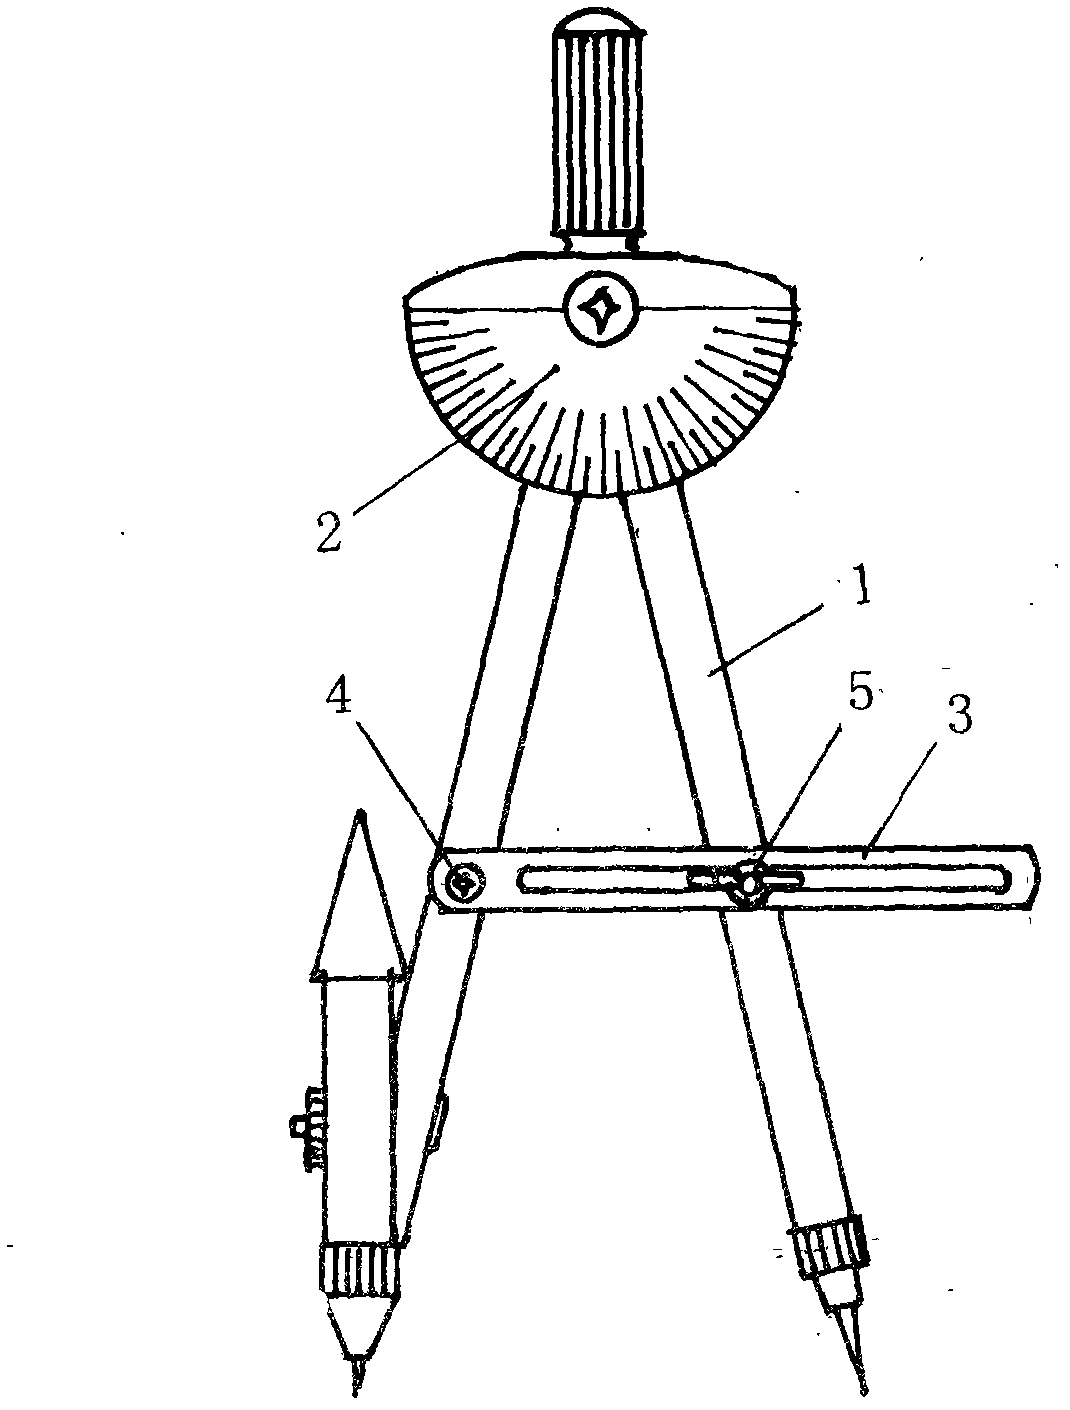 Multi-functional compasses